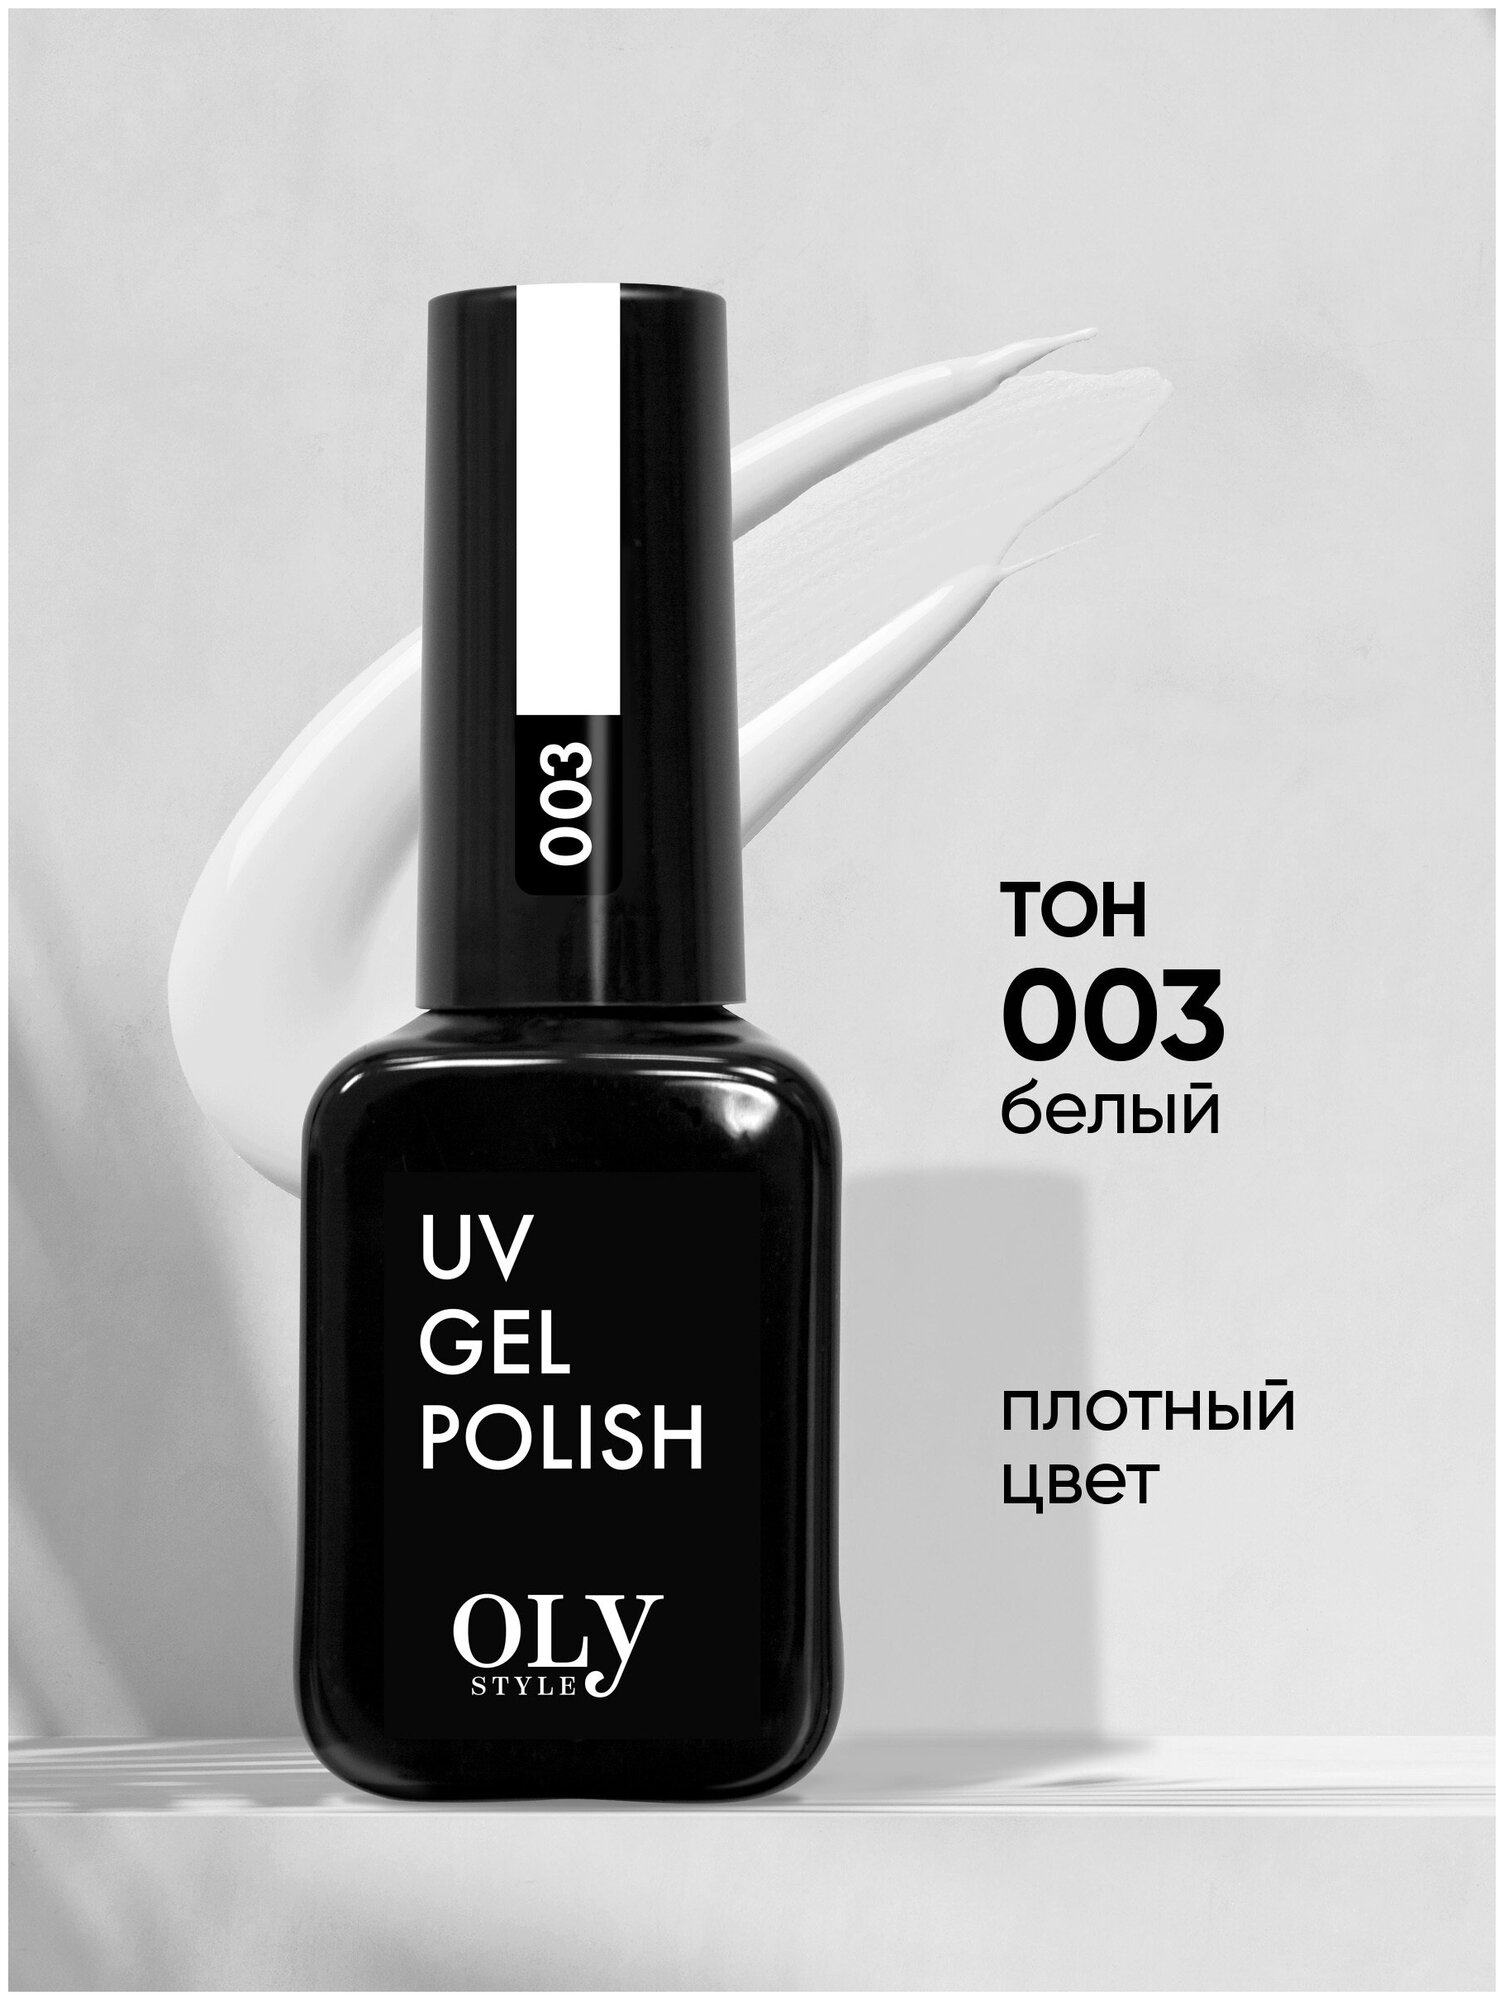 Olystyle Гель-лак для ногтей OLS UV, тон 003 белый, 10мл